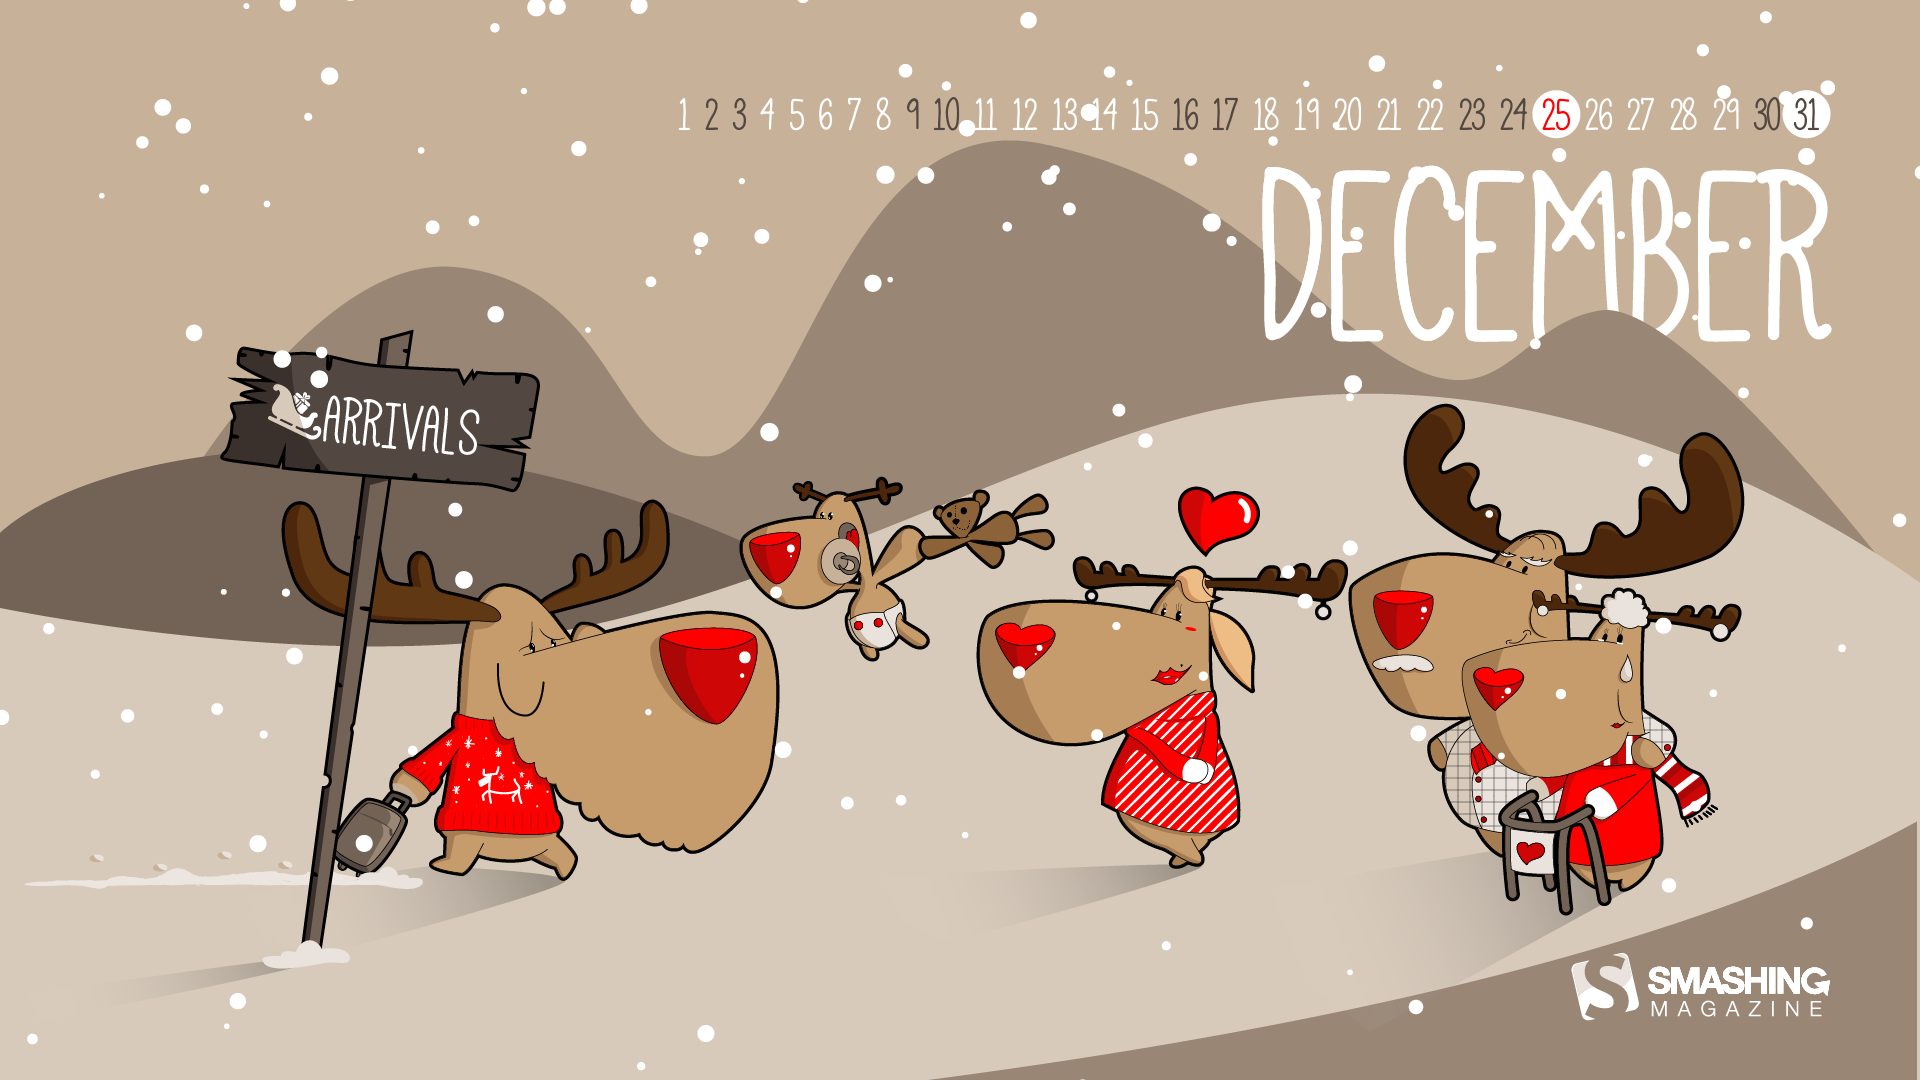 Cheerful Wallpaper To Deck Your December Desktop Edition